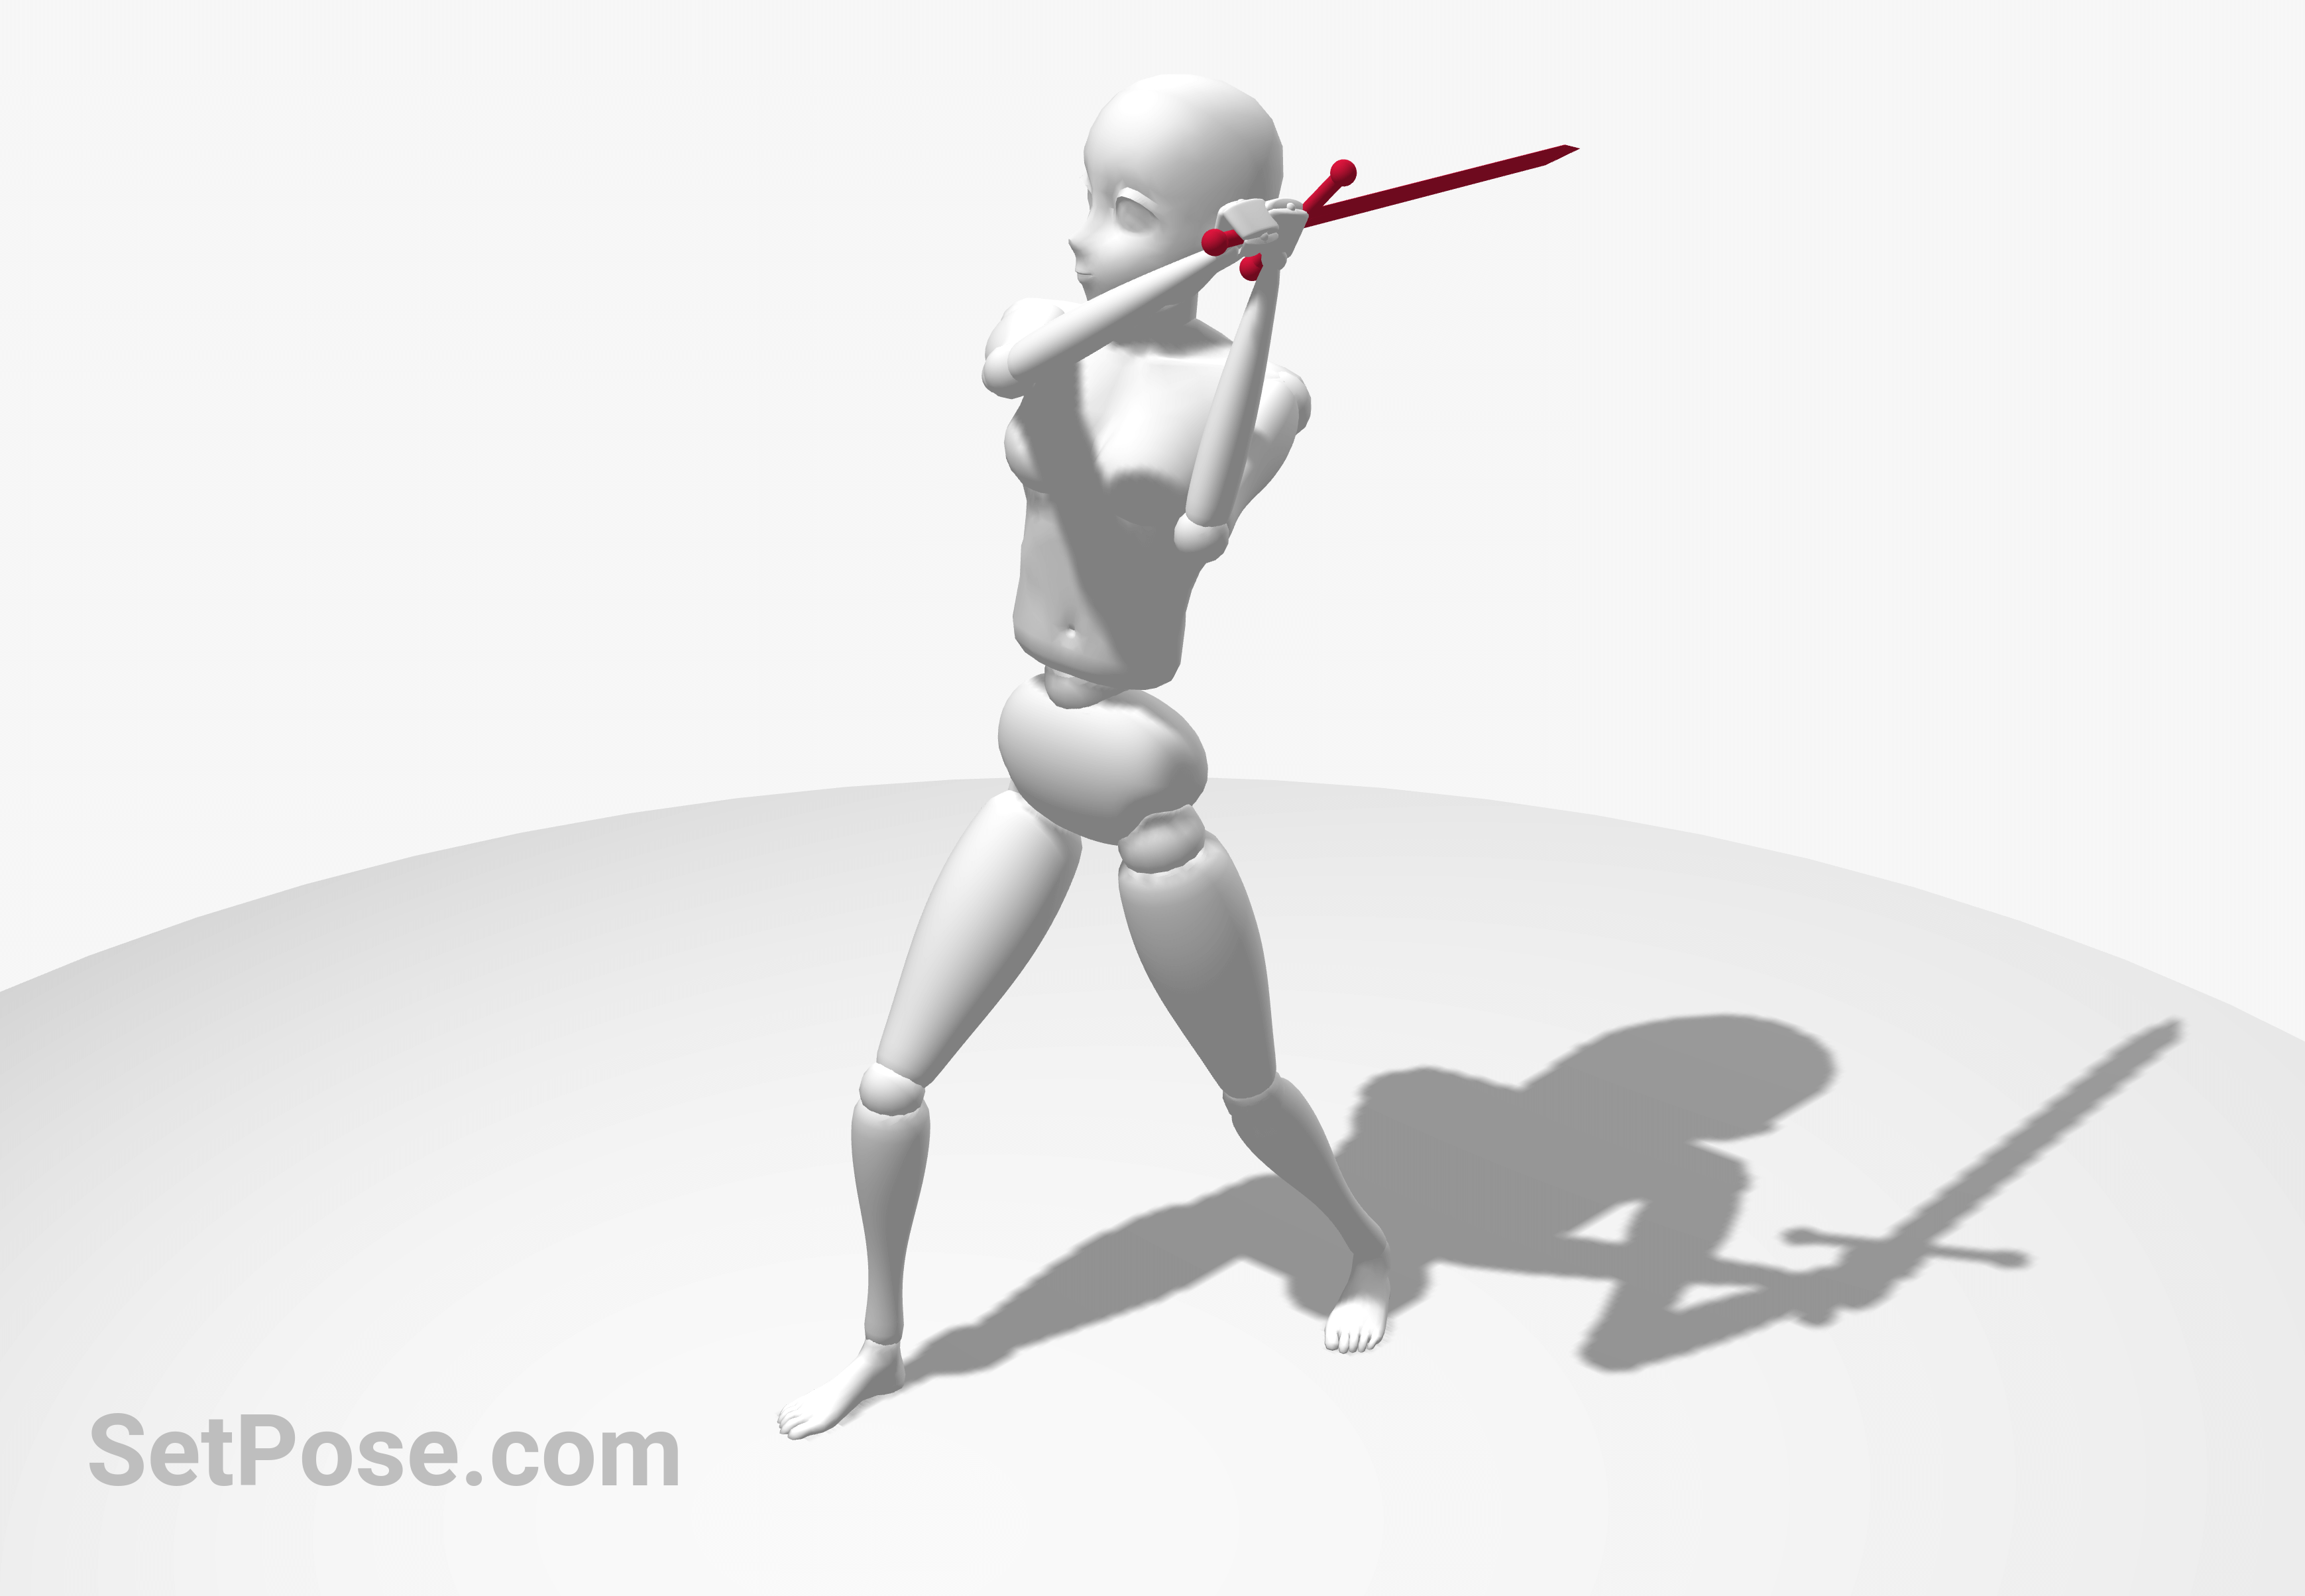 Mannequin Sword Poses by Windam on DeviantArt